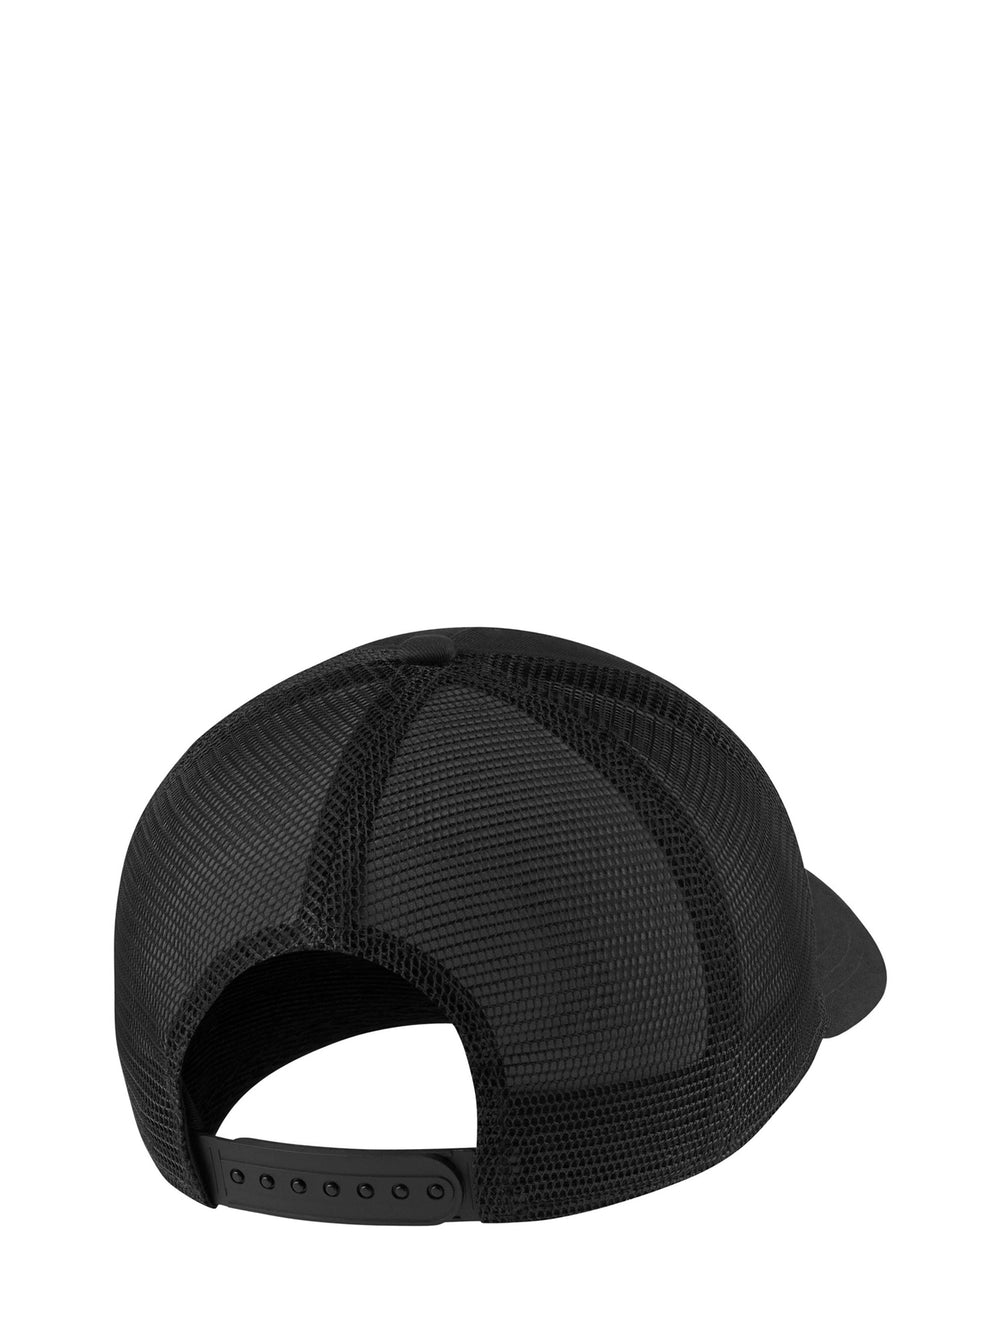 NIKE NSW CLC99 FUTURA TRUCKER HAT - BLACK/WHITE - CLEARANCE